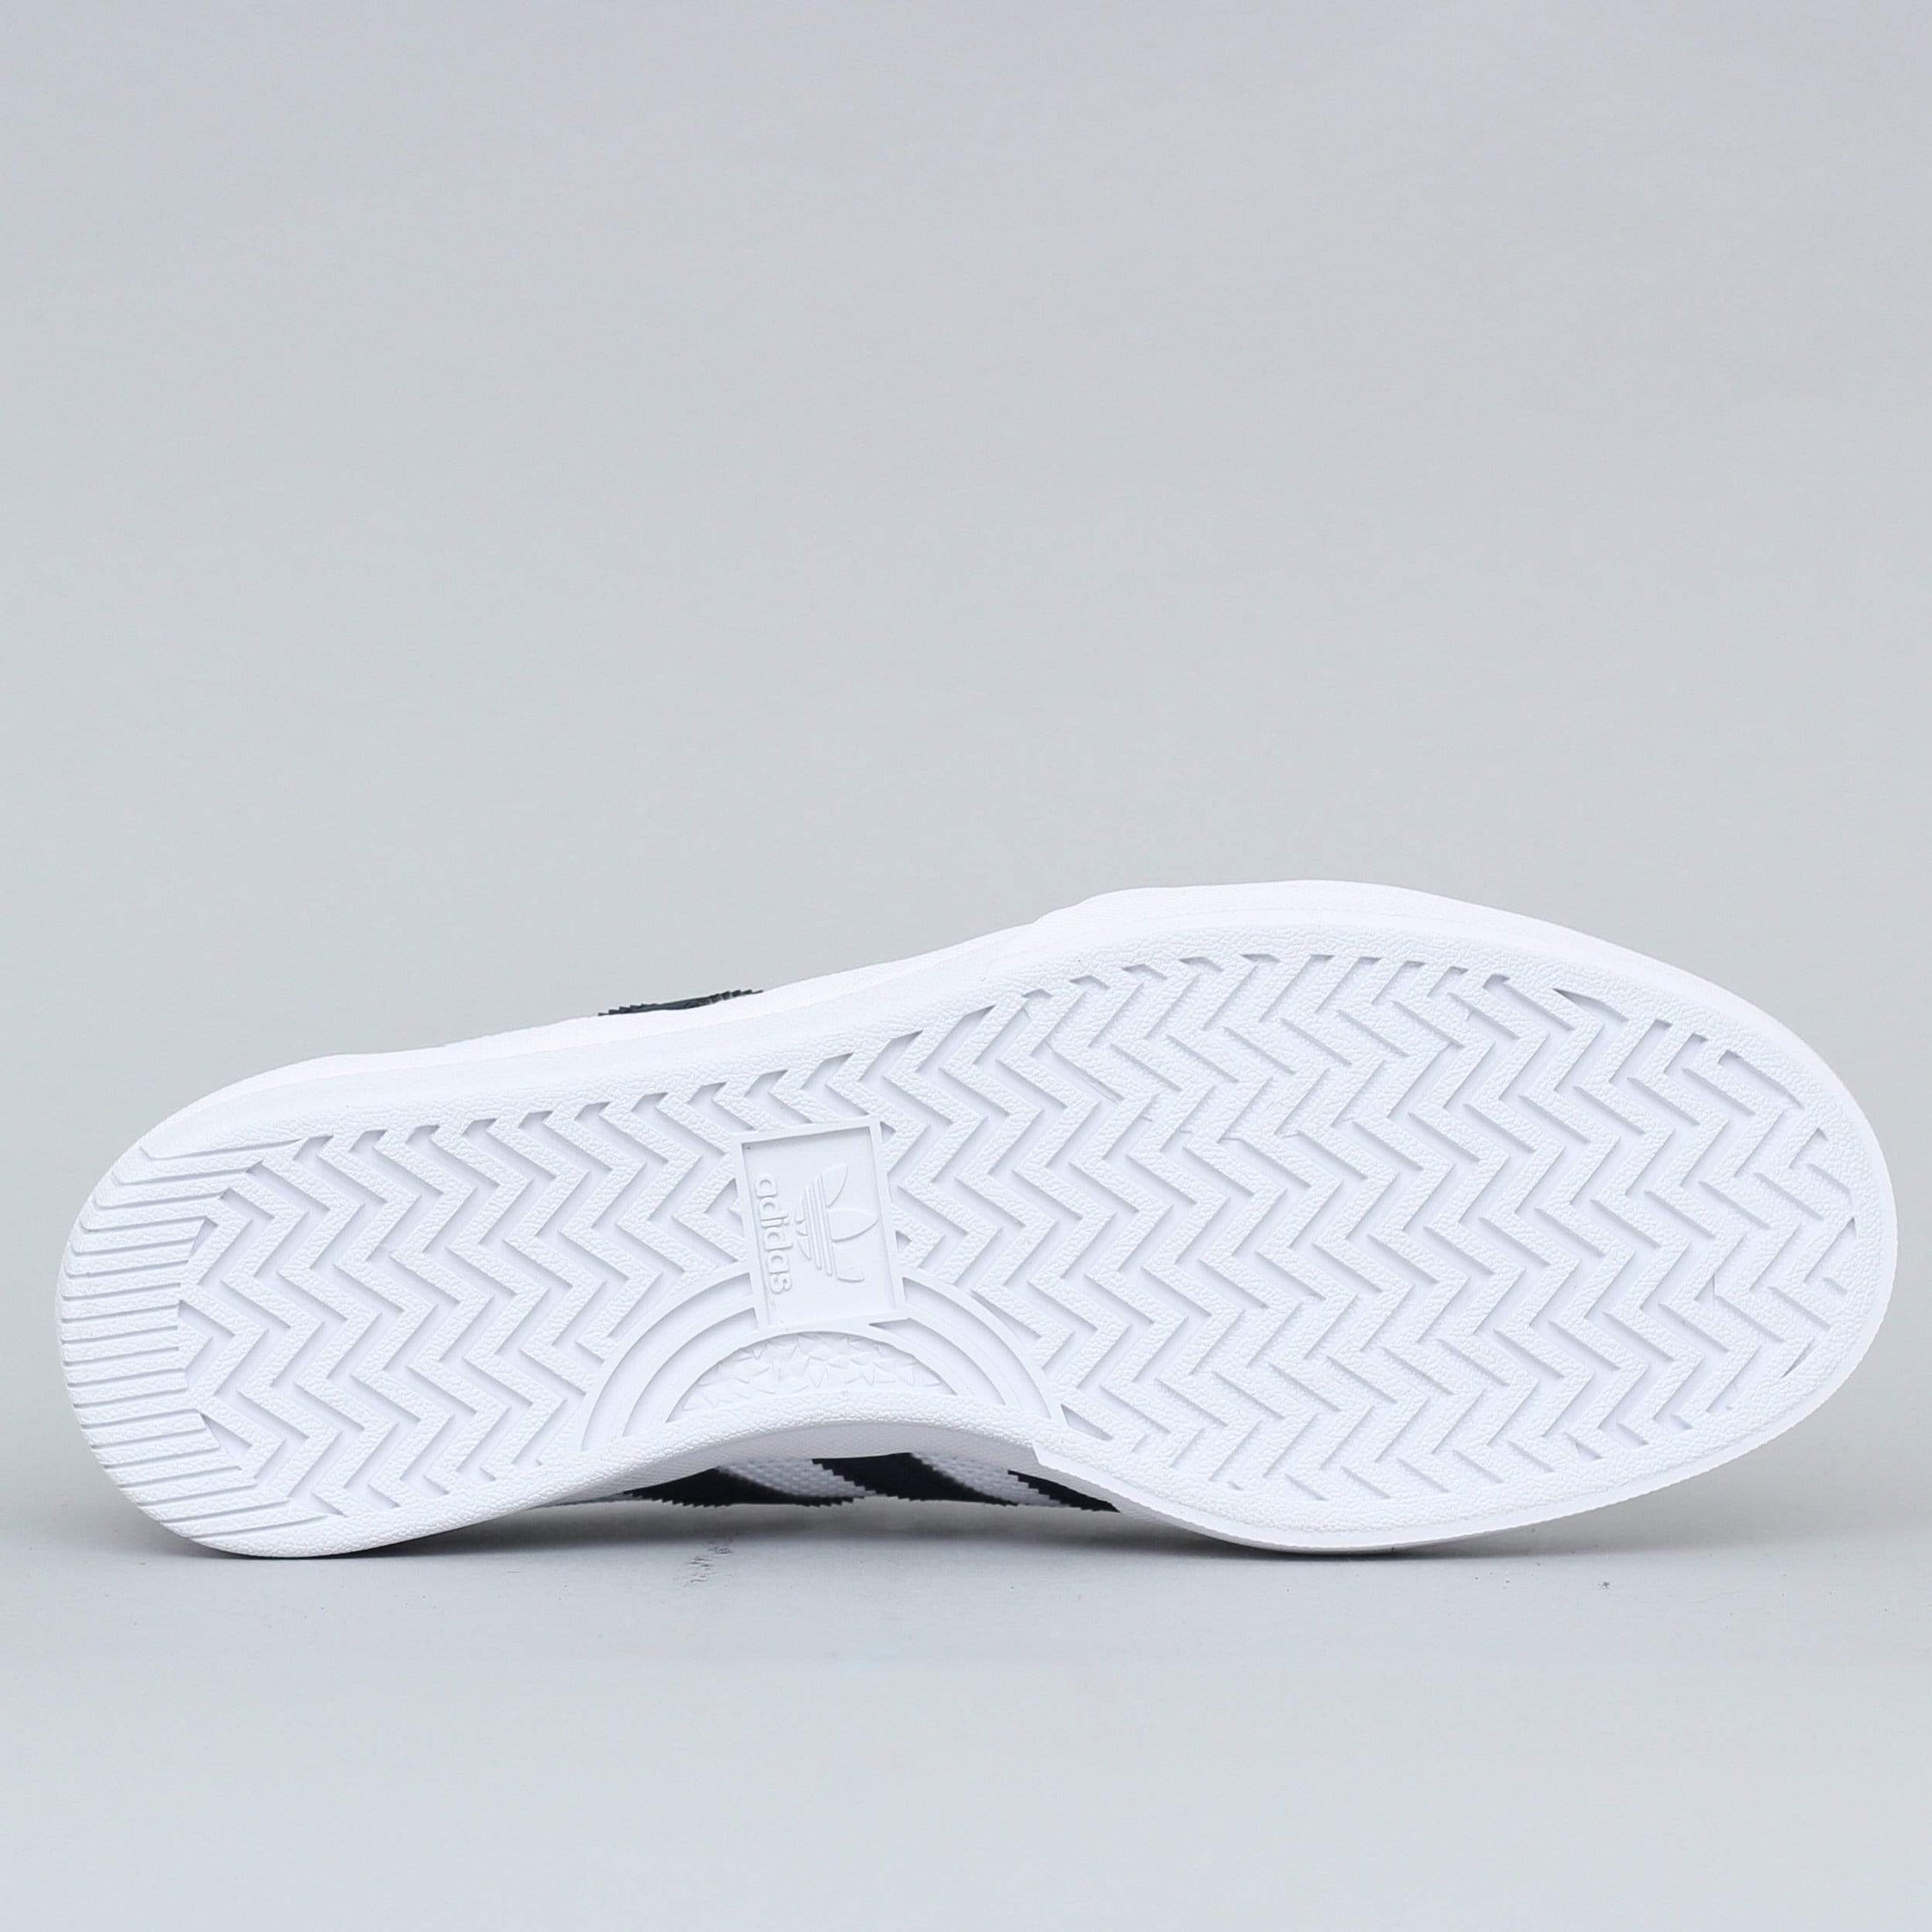 adidas Lucas Premiere Shoes Footwear White / Legend Ink / Footwear White